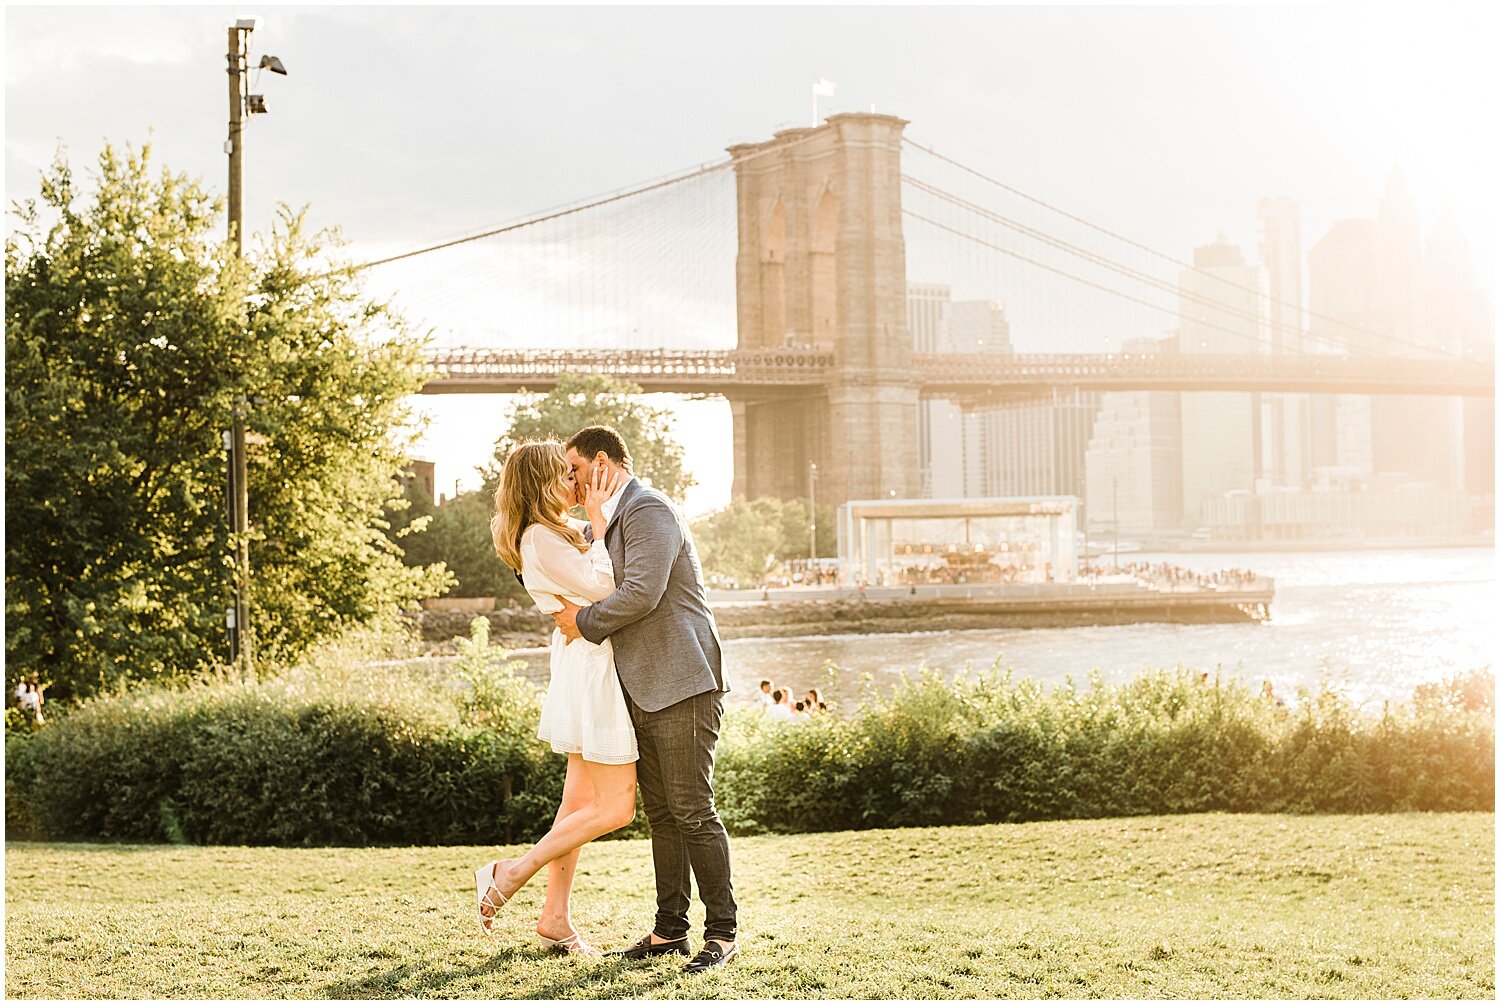 DUMBO-Brooklyn-Engagement-Photos-Brooklyn-Photography-Apollo-Fields-004.jpg